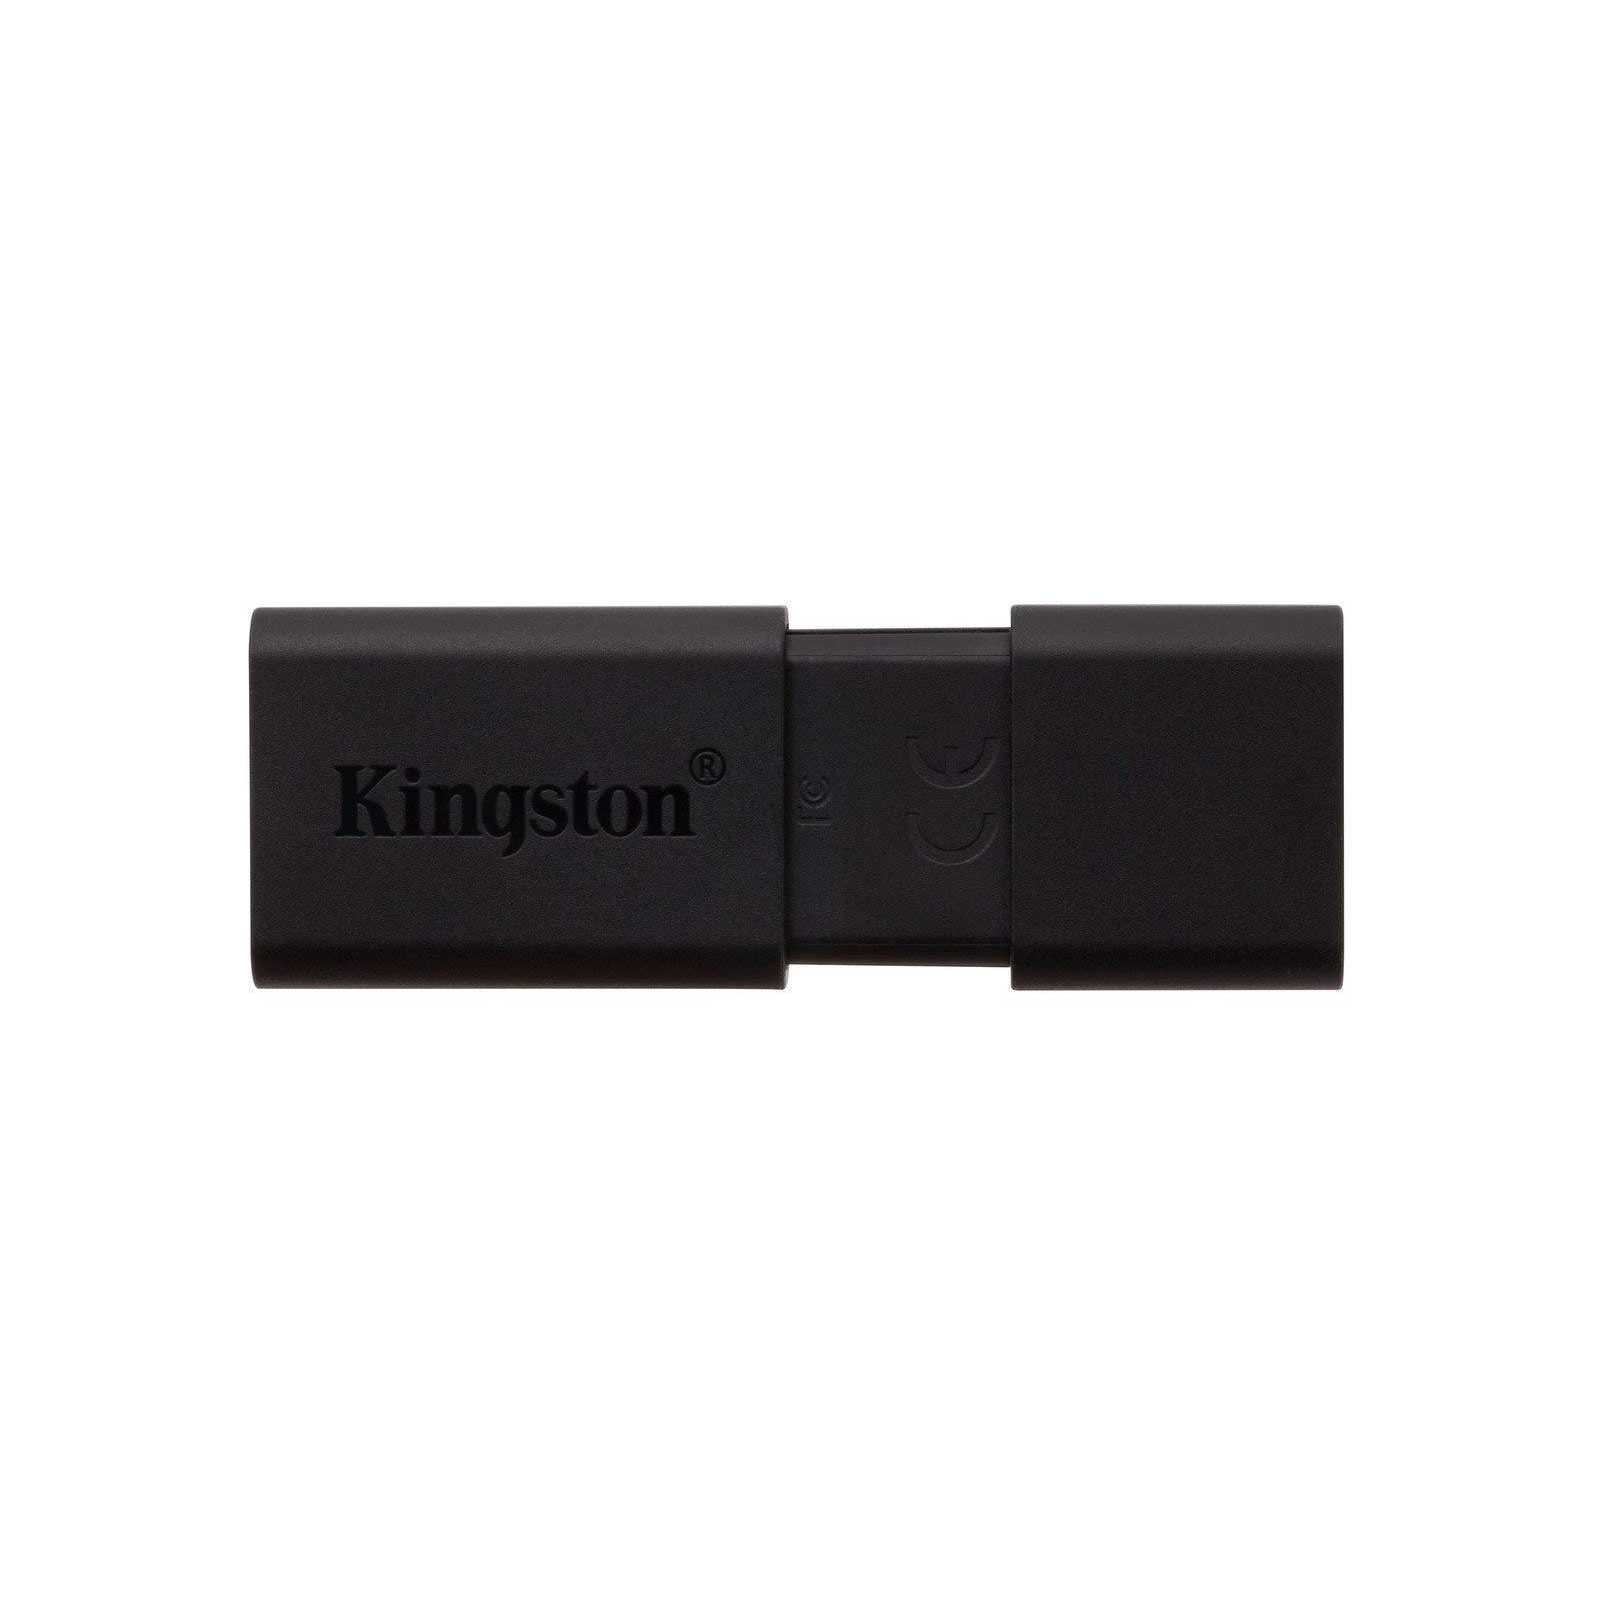 USB флеш накопитель Kingston 256GB DT 100 G3 Black USB 3.0 (DT100G3/256GB) изображение 2